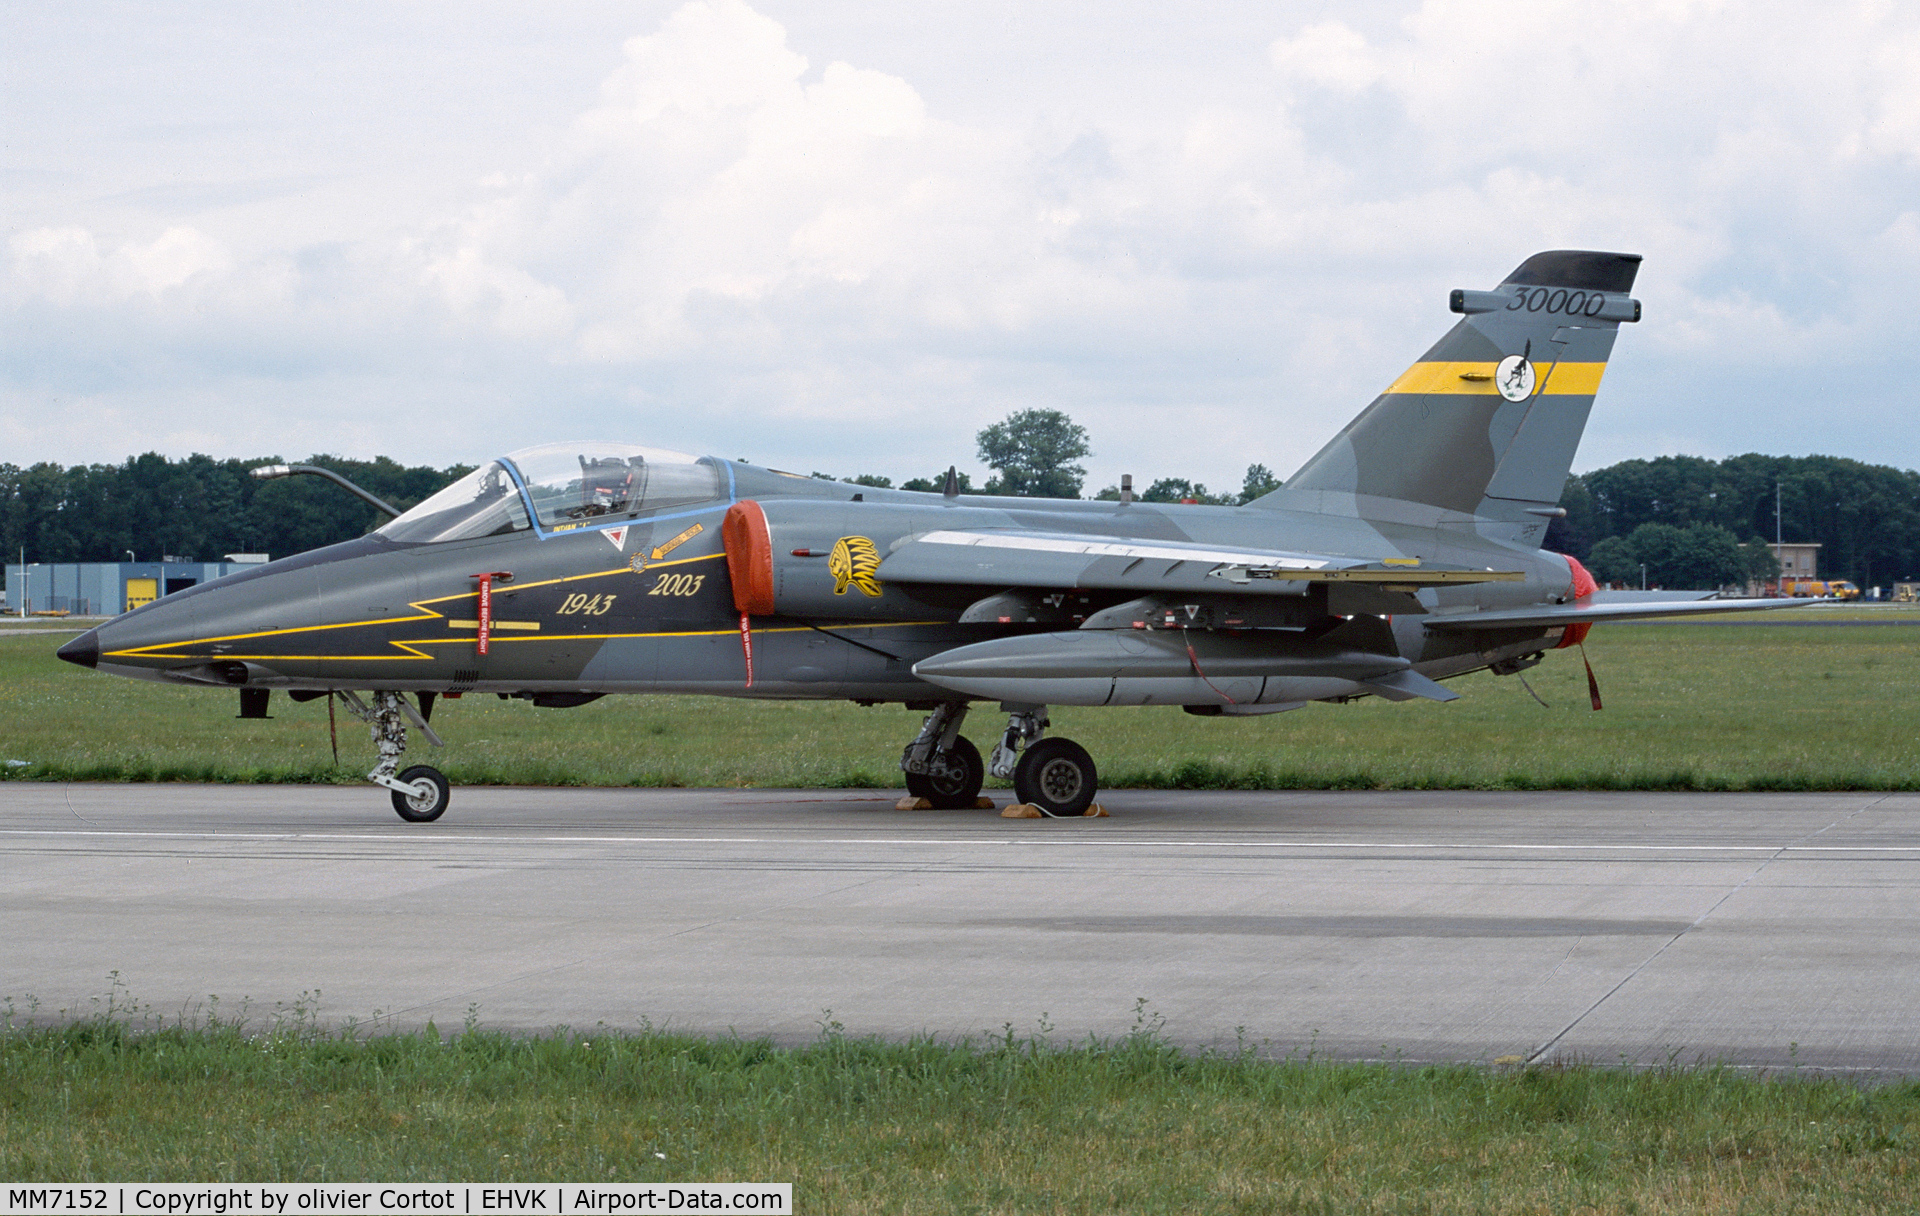 MM7152, 1991 AMX International AMX C/N IX064, Volkel 2004 airshow